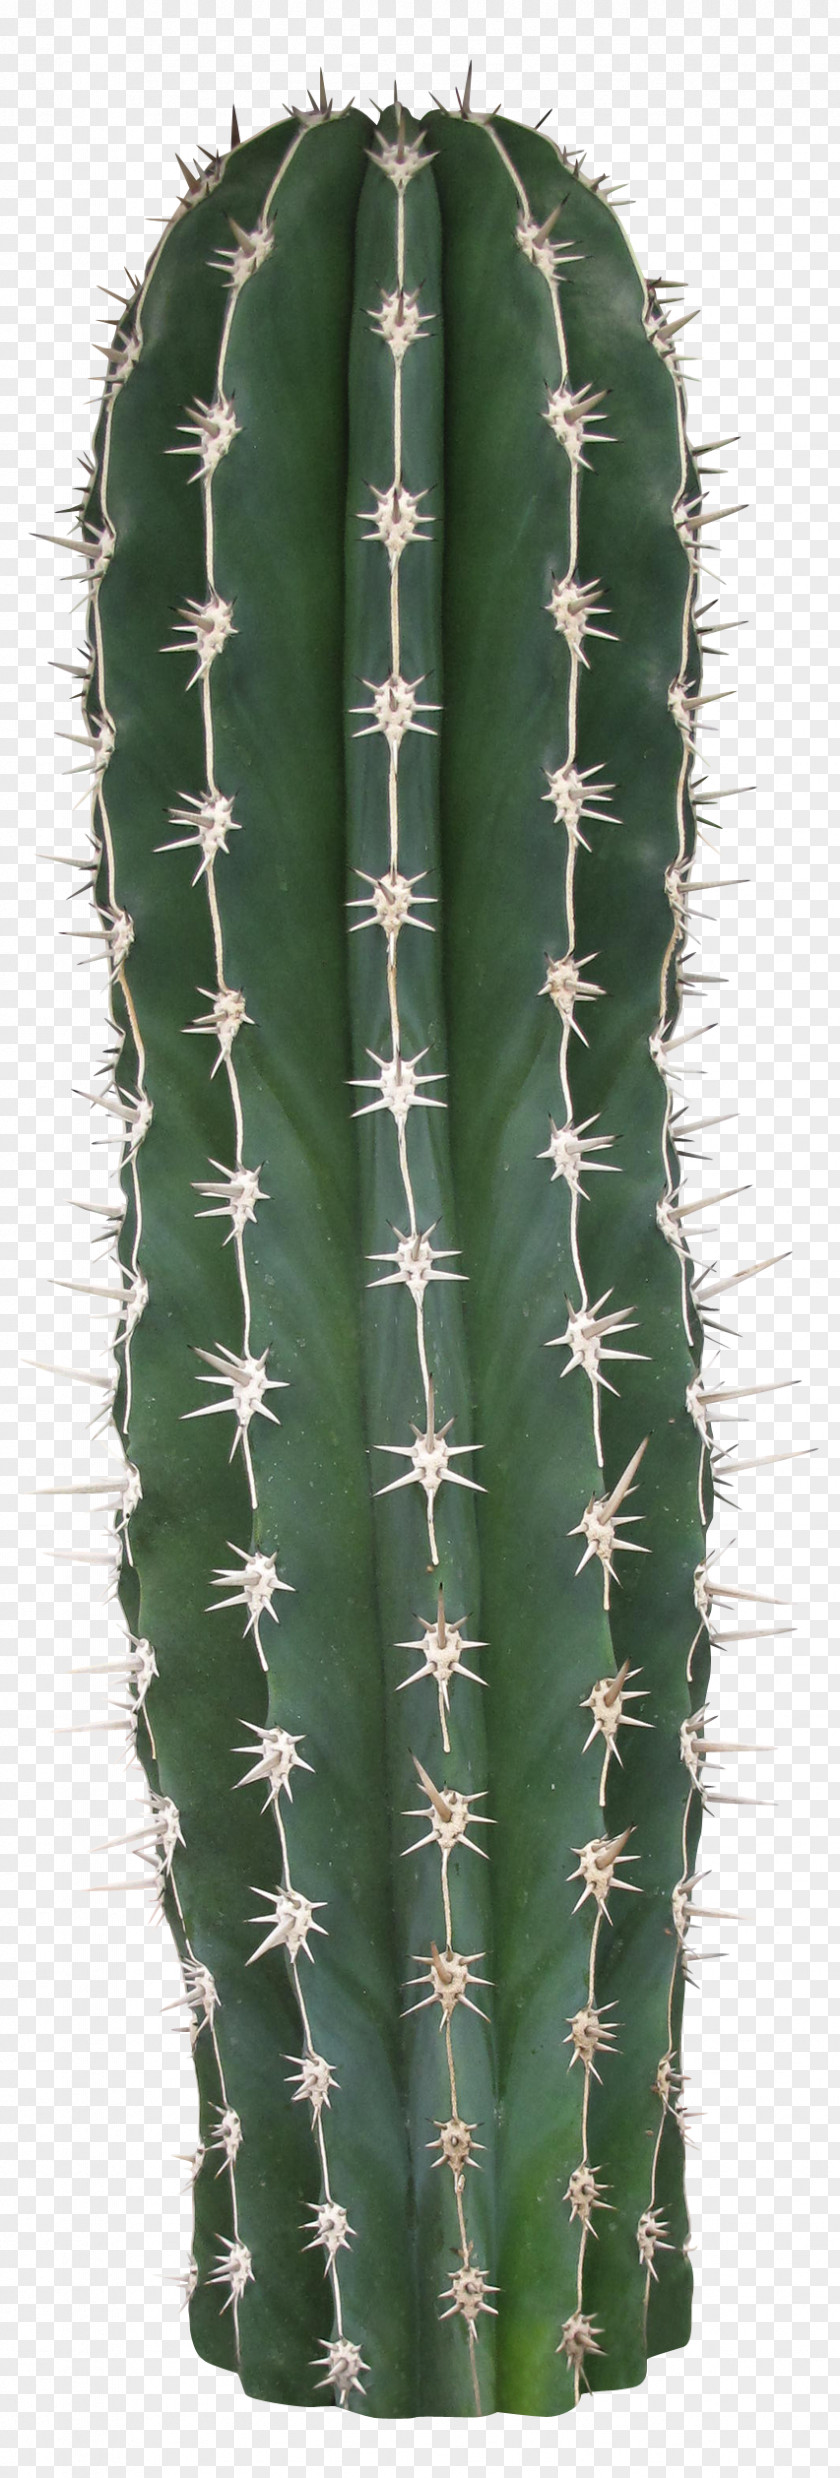 Long Cactus Acanthocereus Tetragonus San Pedro Cactaceae Thorns, Spines, And Prickles PNG